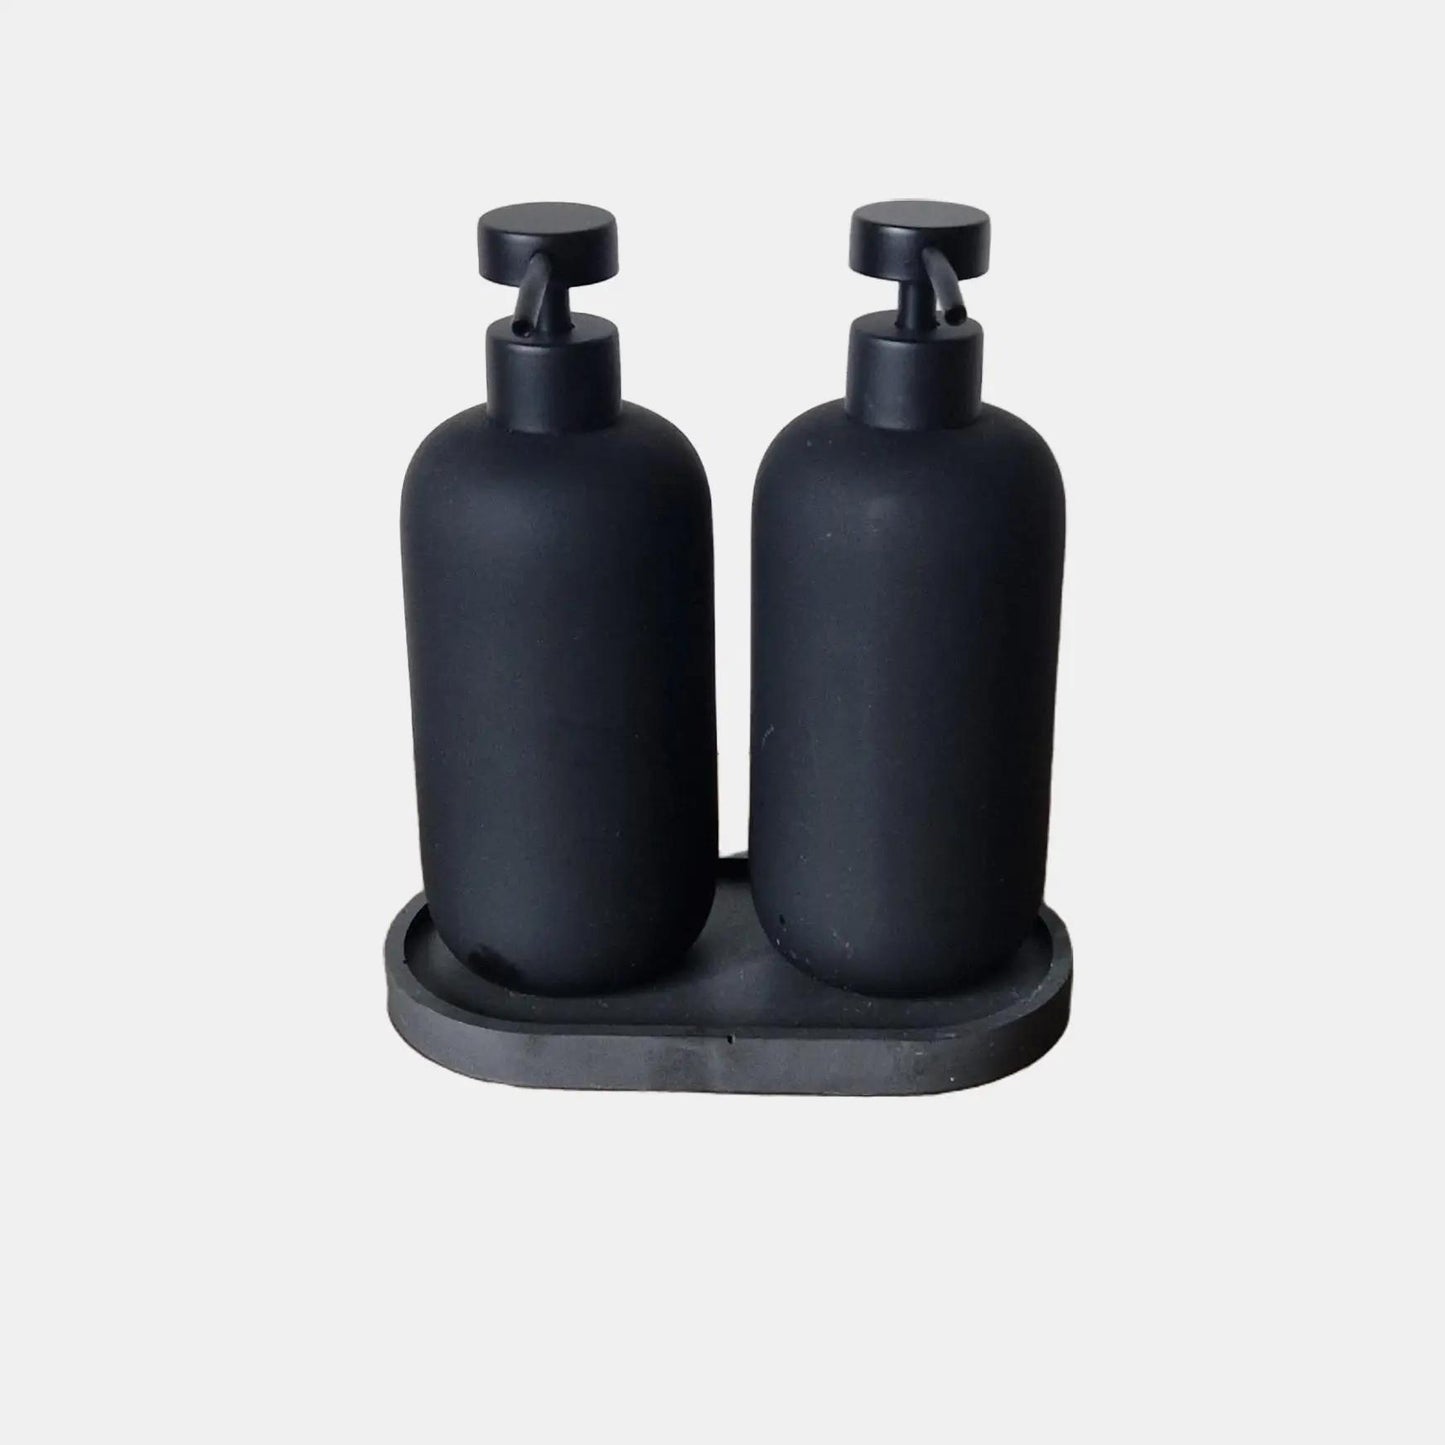 Small Black Jesmonite Oval Tray with Soap Dispensers